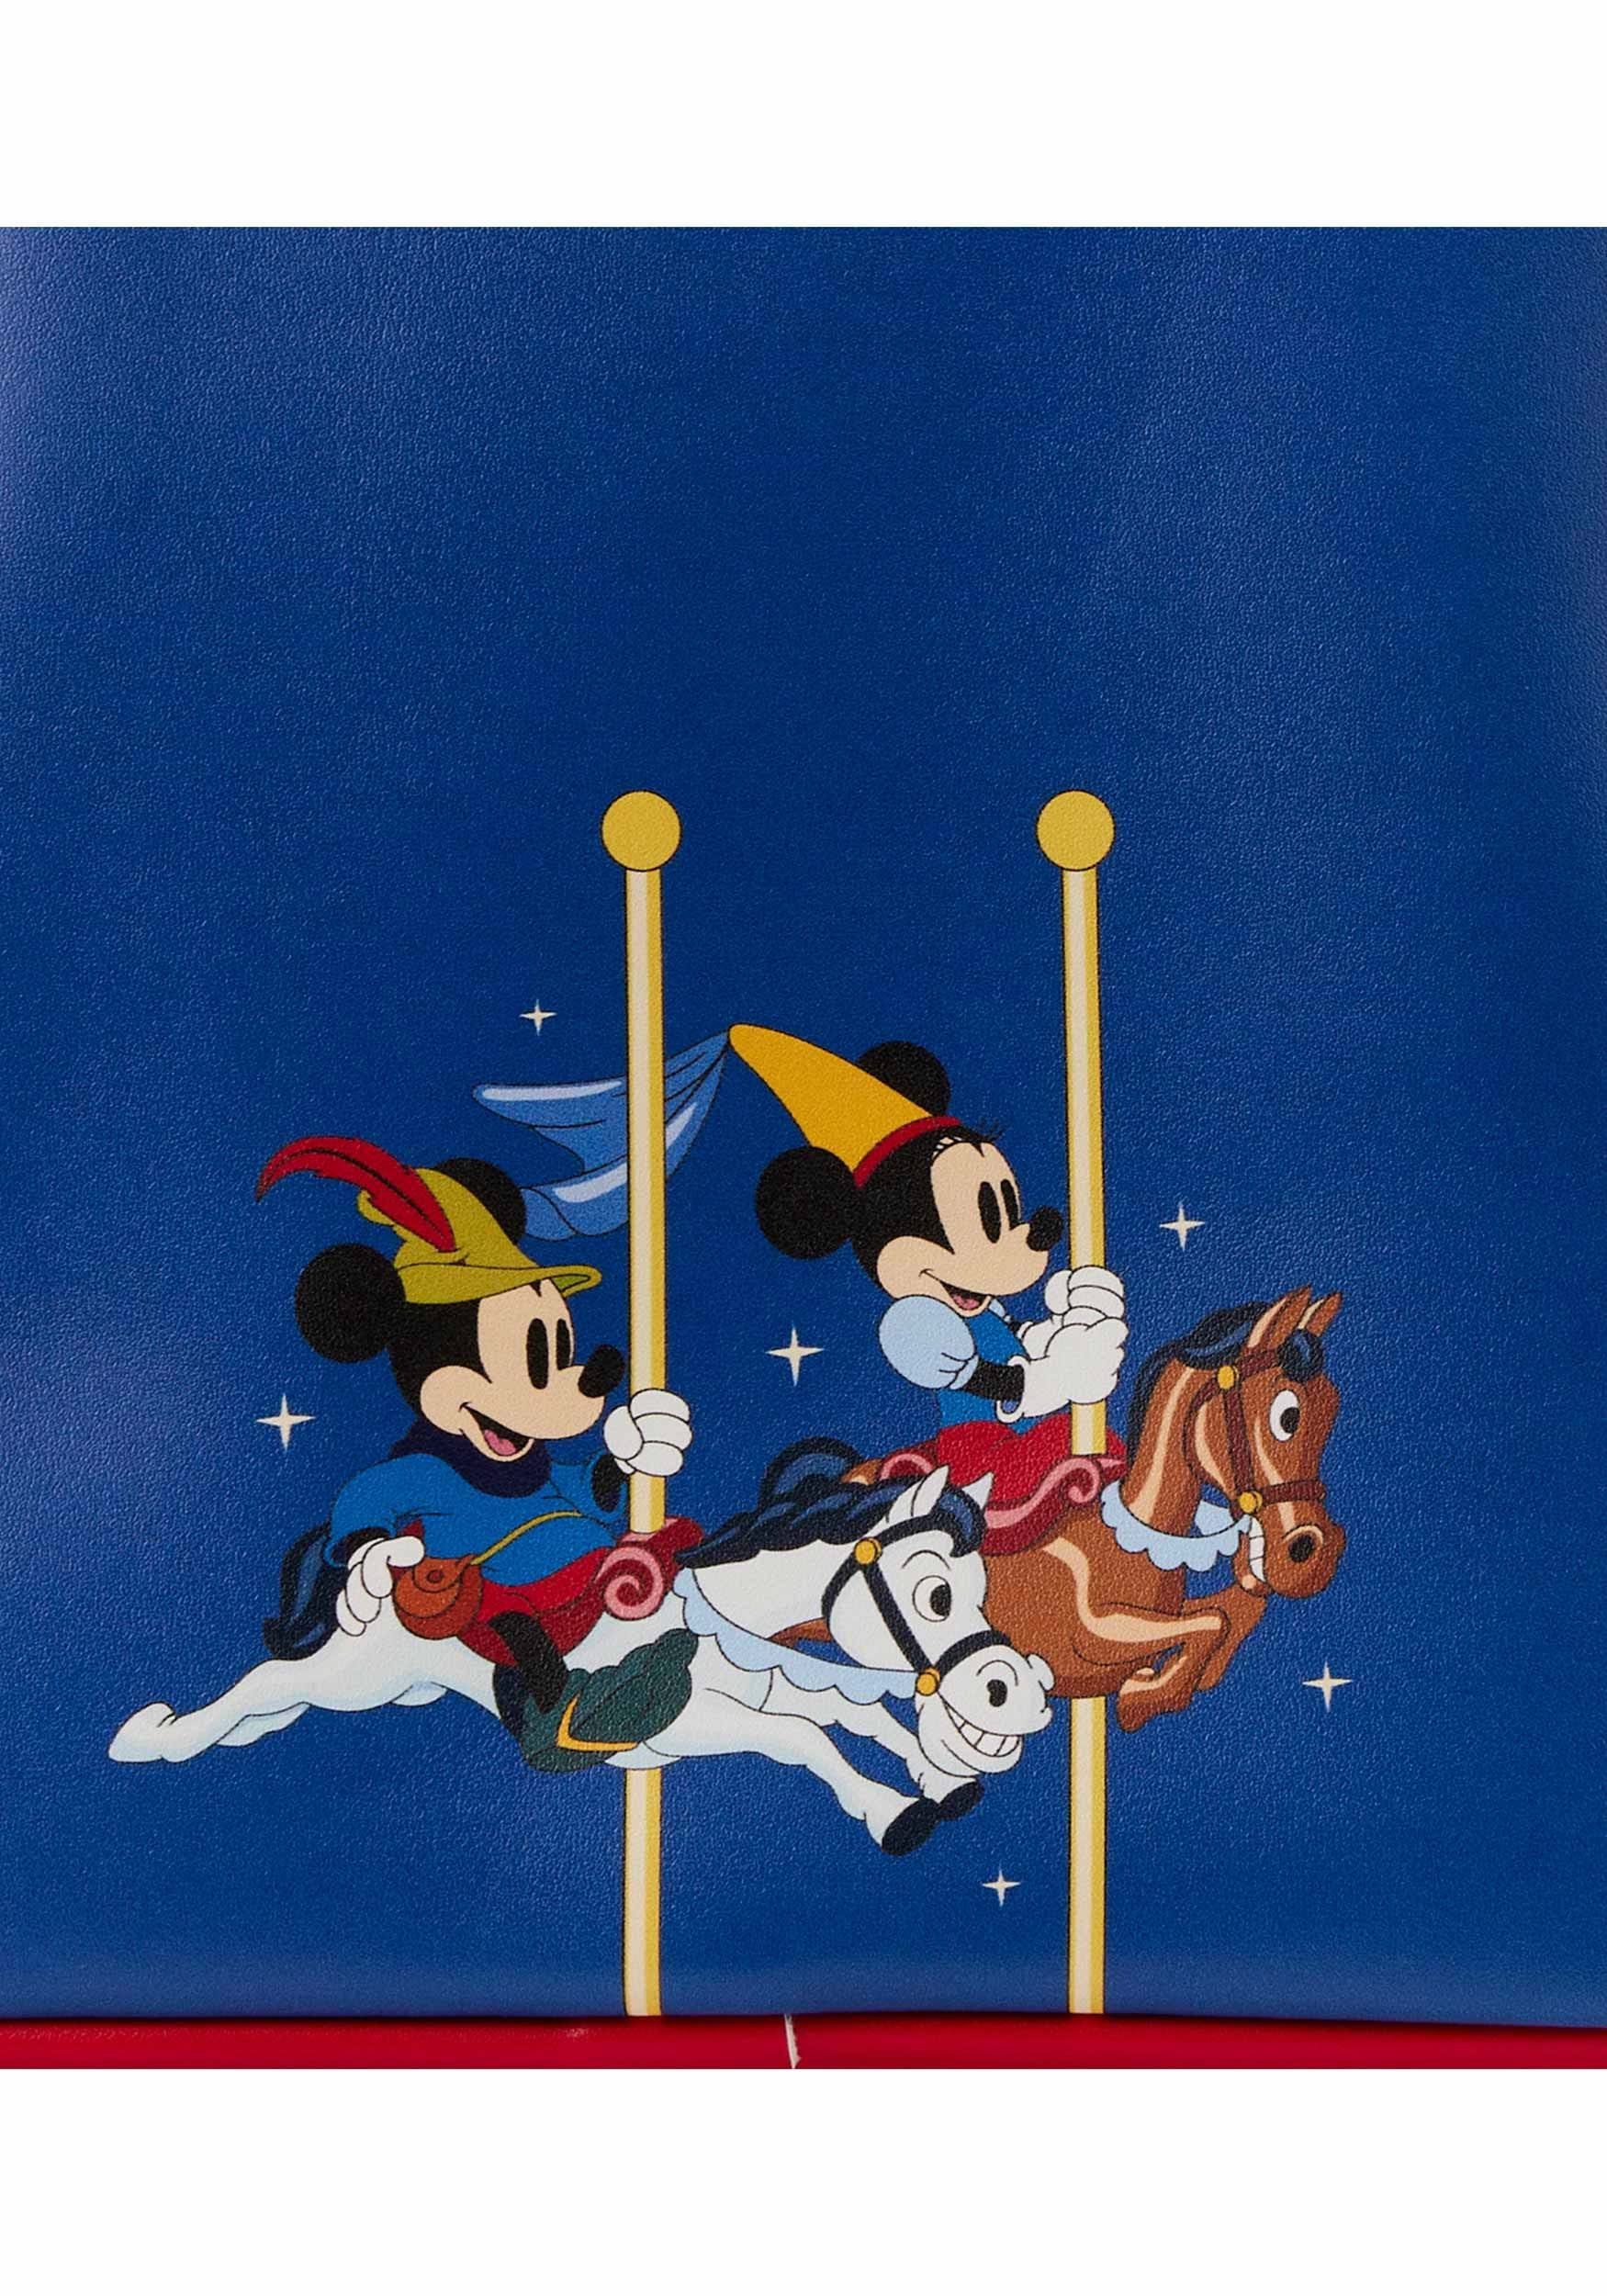 Disney Brave Little Tailor Minnie Ears Headband